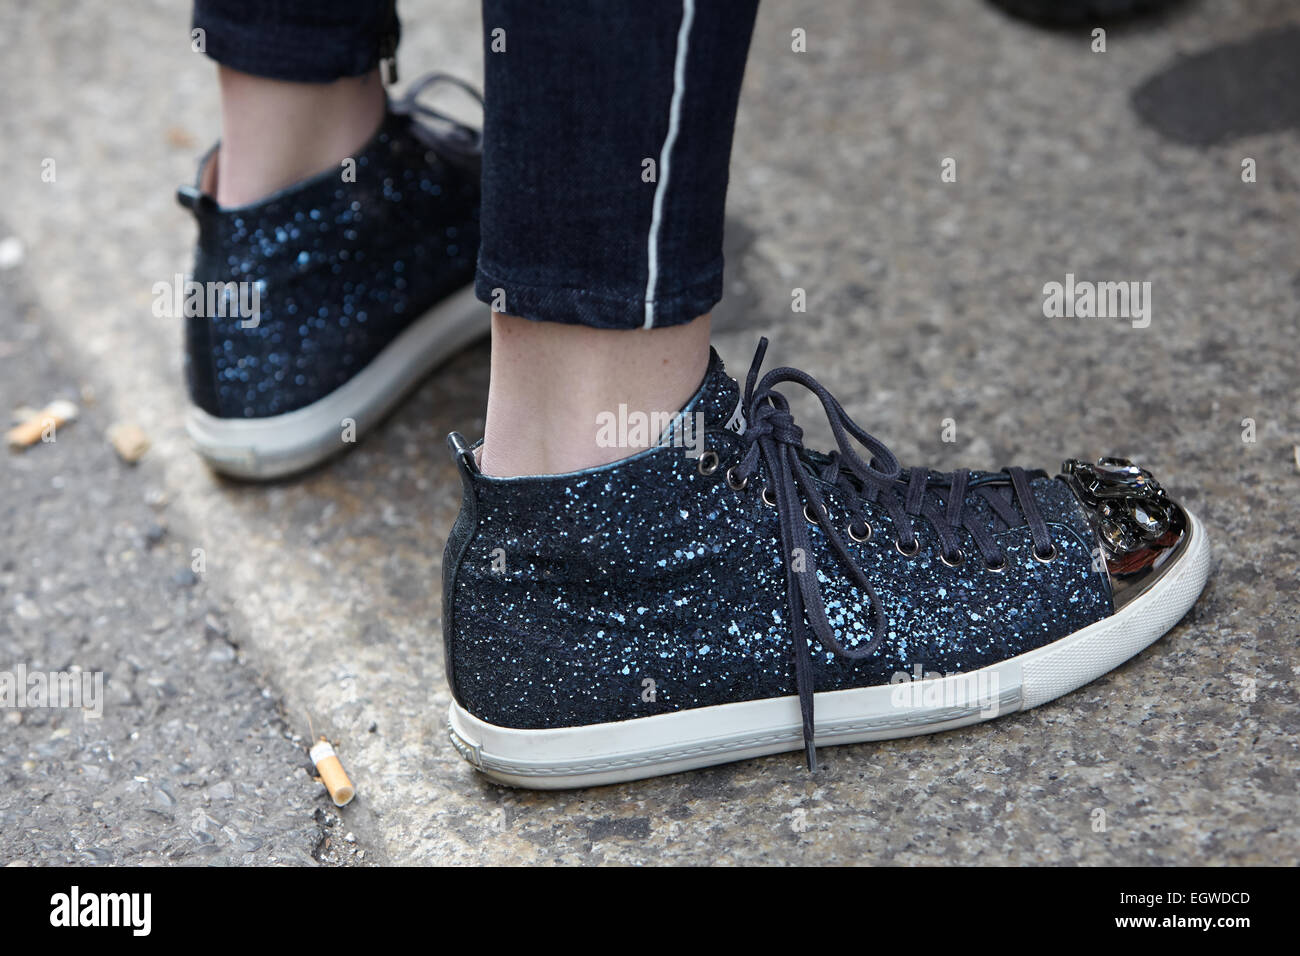 Miu miu shoes e imágenes de alta resolución - Alamy